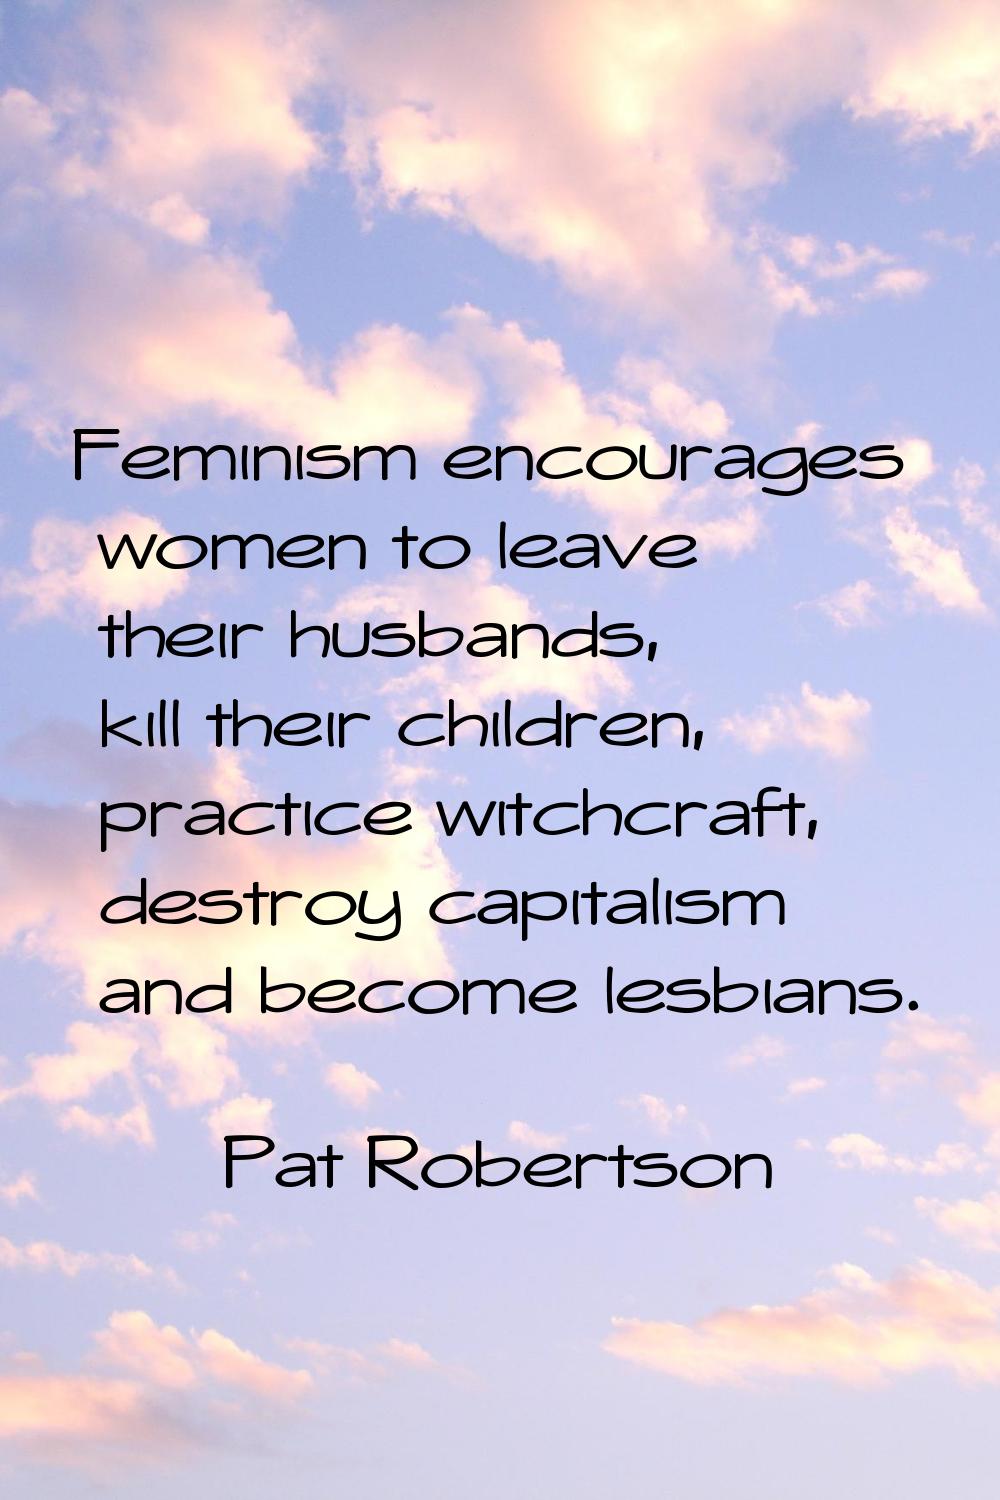 Feminism encourages women to leave their husbands, kill their children, practice witchcraft, destro